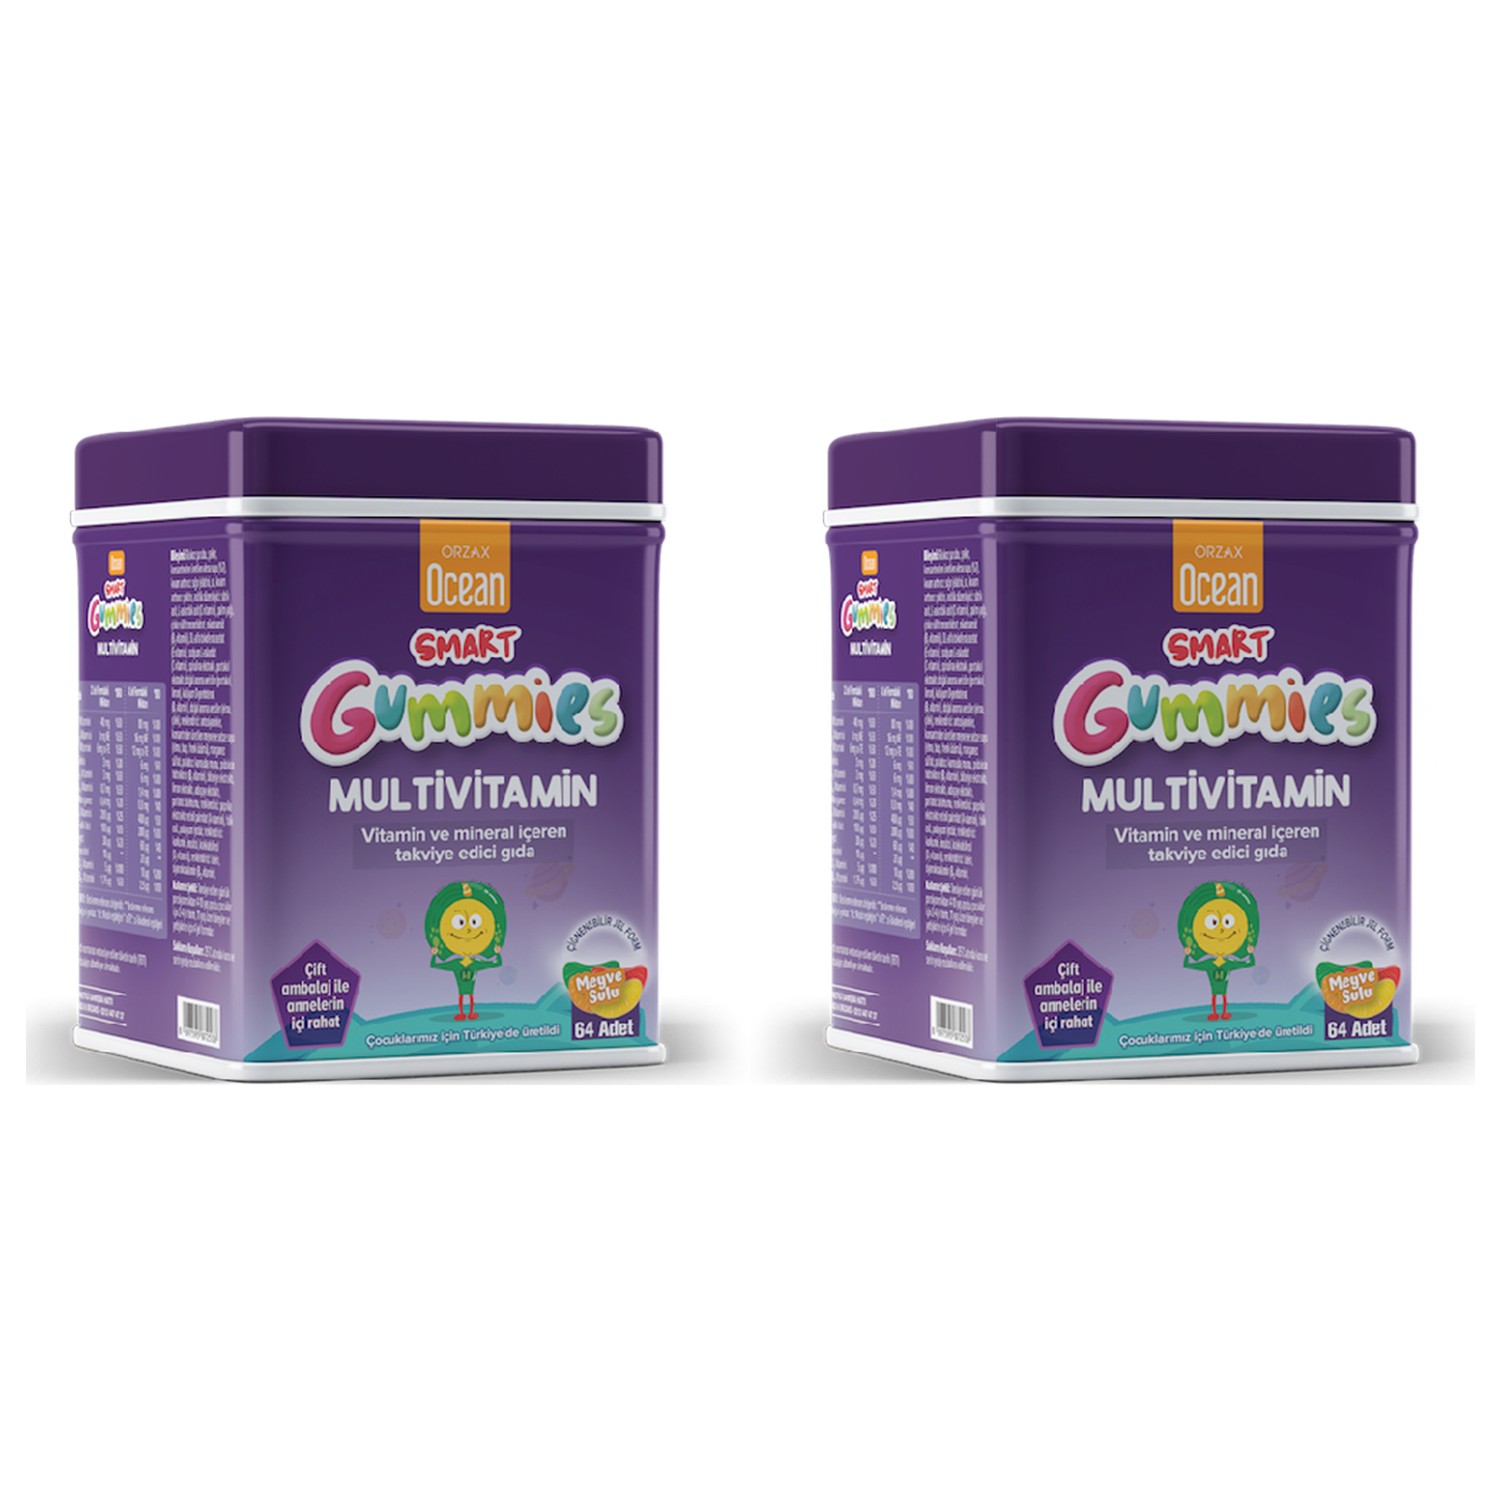 Пищевая добавка Orzax Ocean Smart Gummies Multivitamin Clenchable, 2 упаковки по 64 таблетки kos rise n shine energy gummies citrus 30 gummies